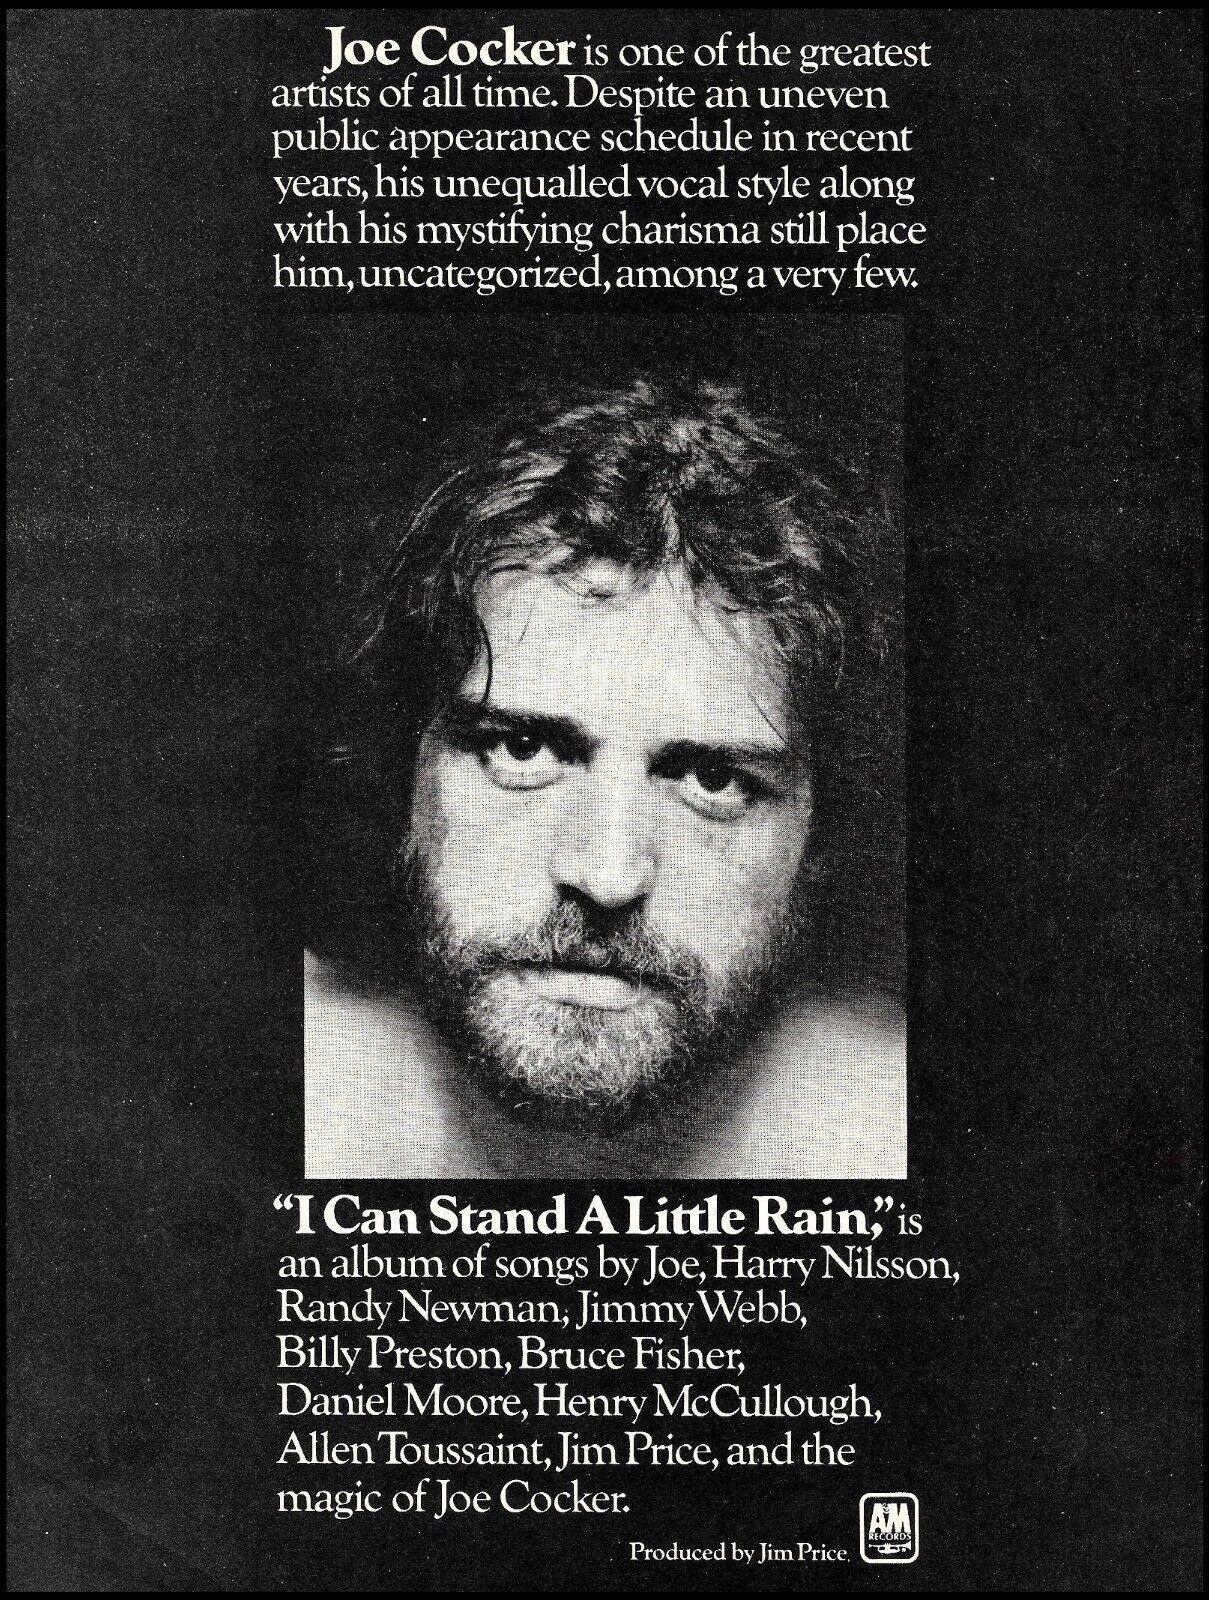 Joe Cocker I Can Stand A Little Rain 1974 A&M Records album advertisement ad